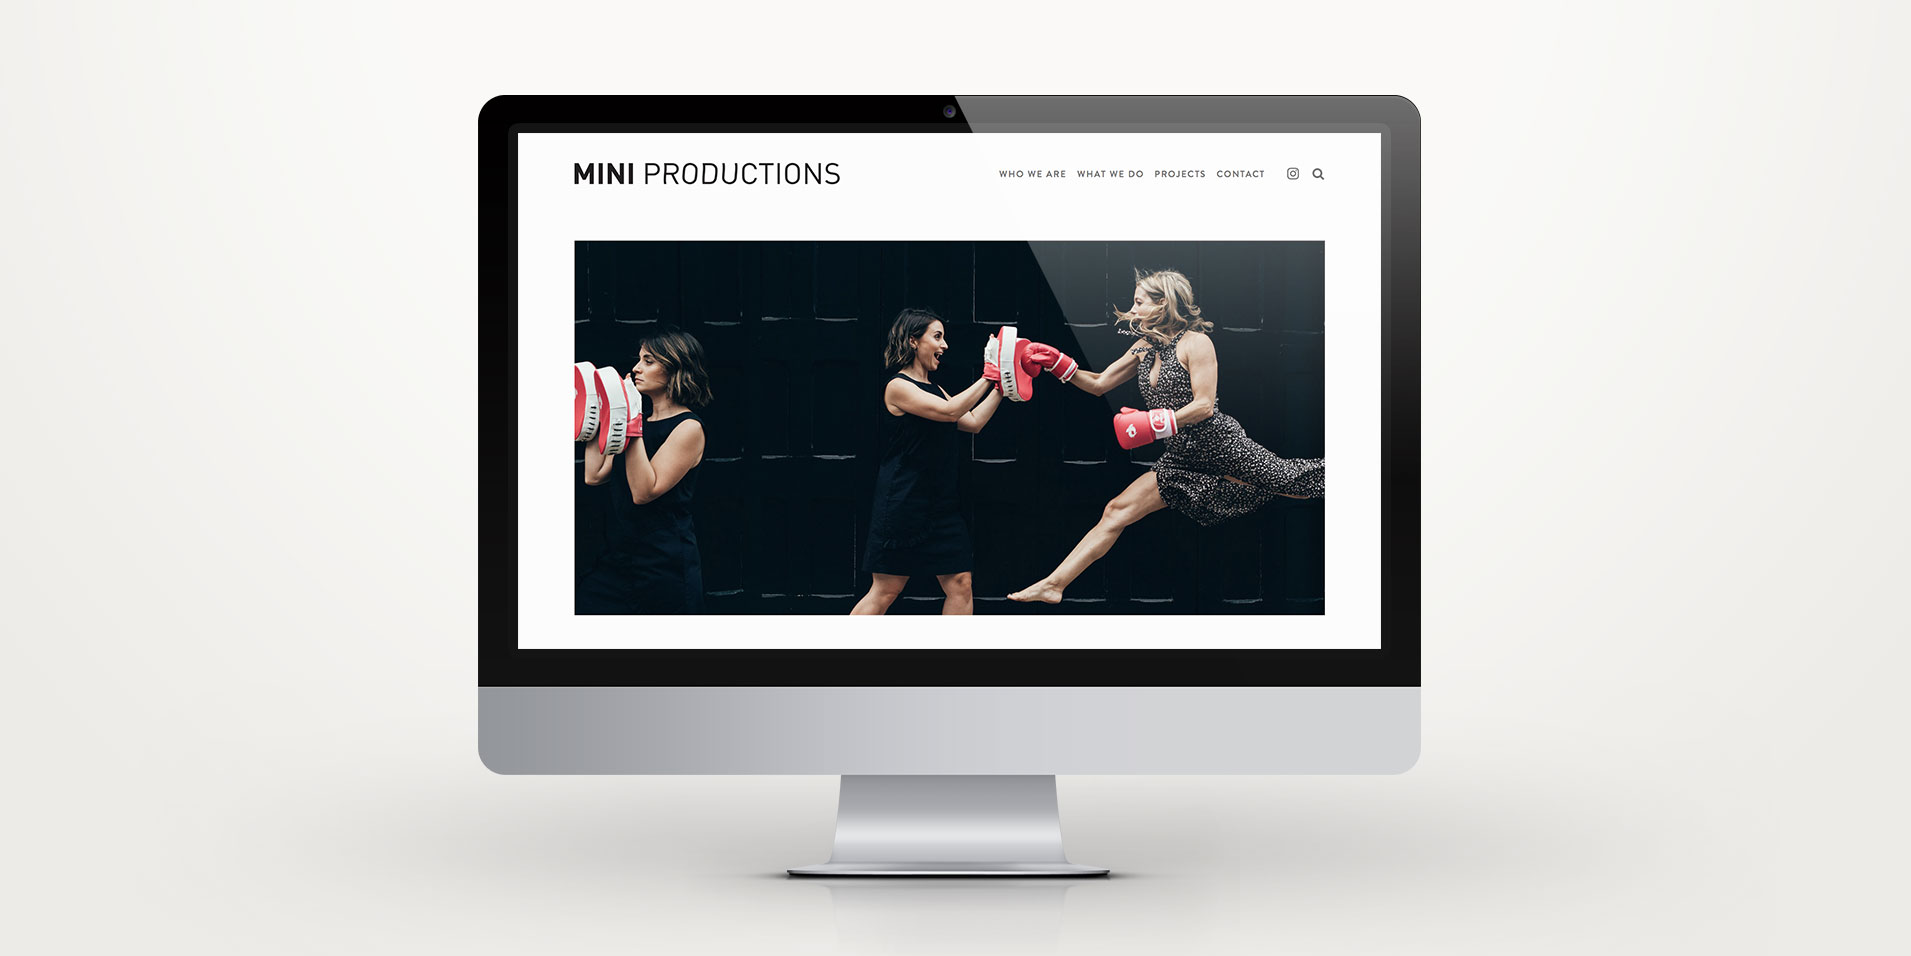 mini-productions-imac-presentation-2.jpg